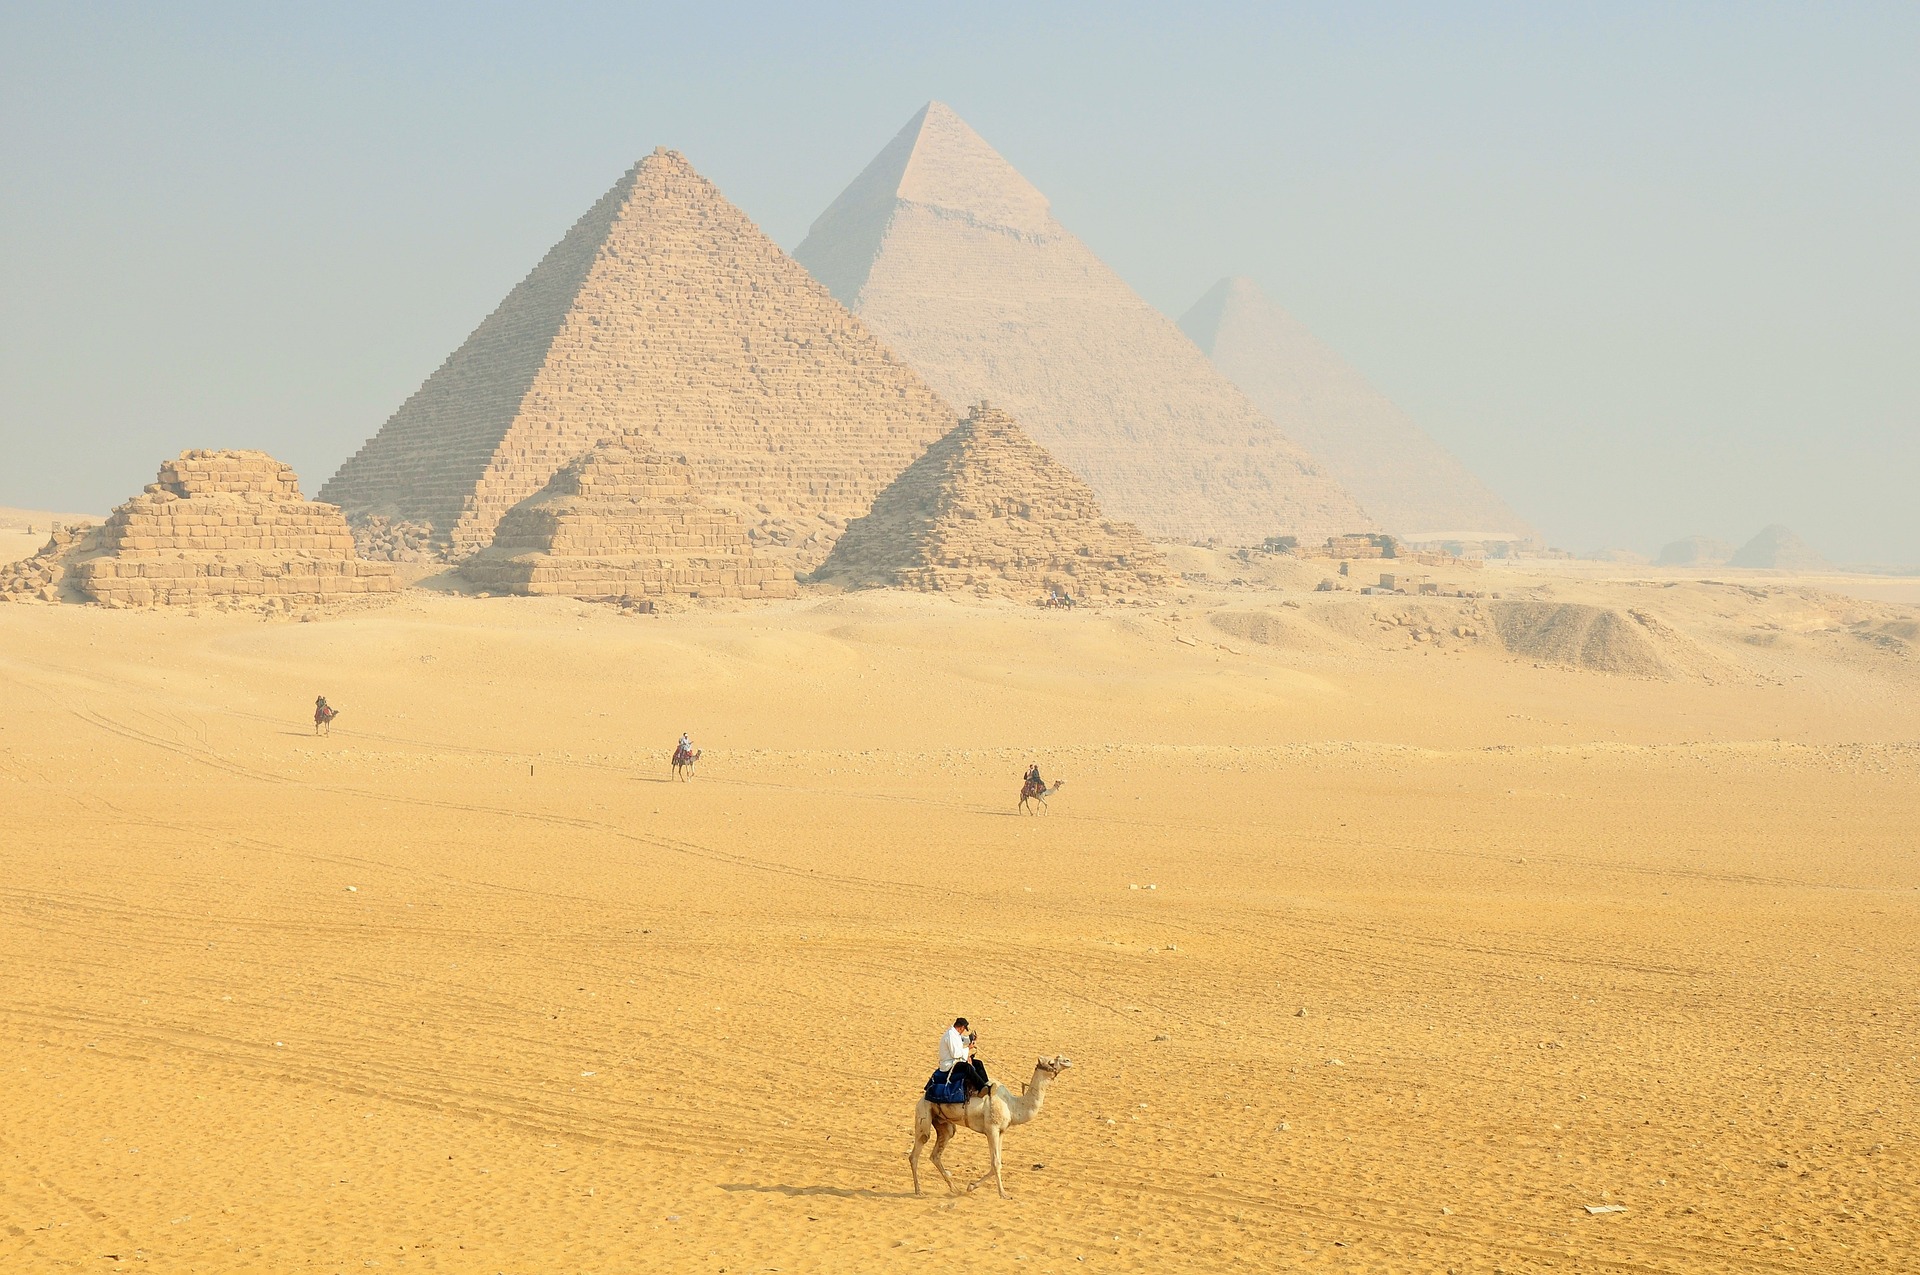 Podróż do Egiptu a paszport – zmiany?!